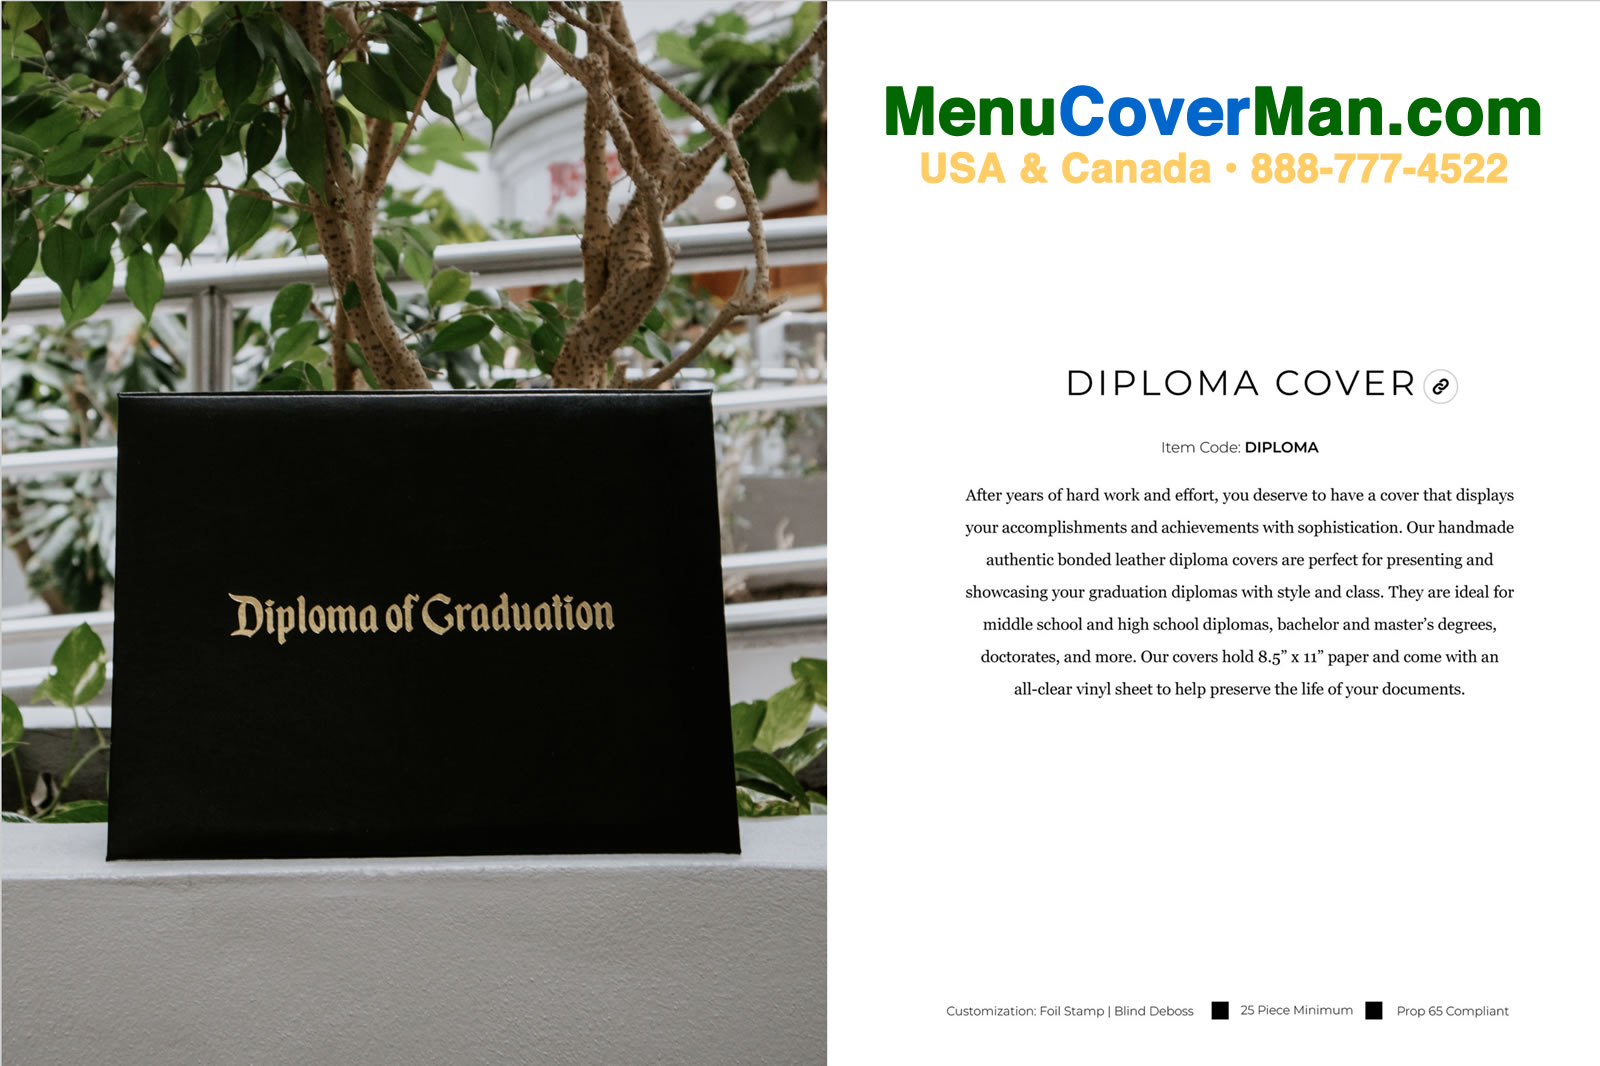 MenuCoverMan Imprinted Diplomas